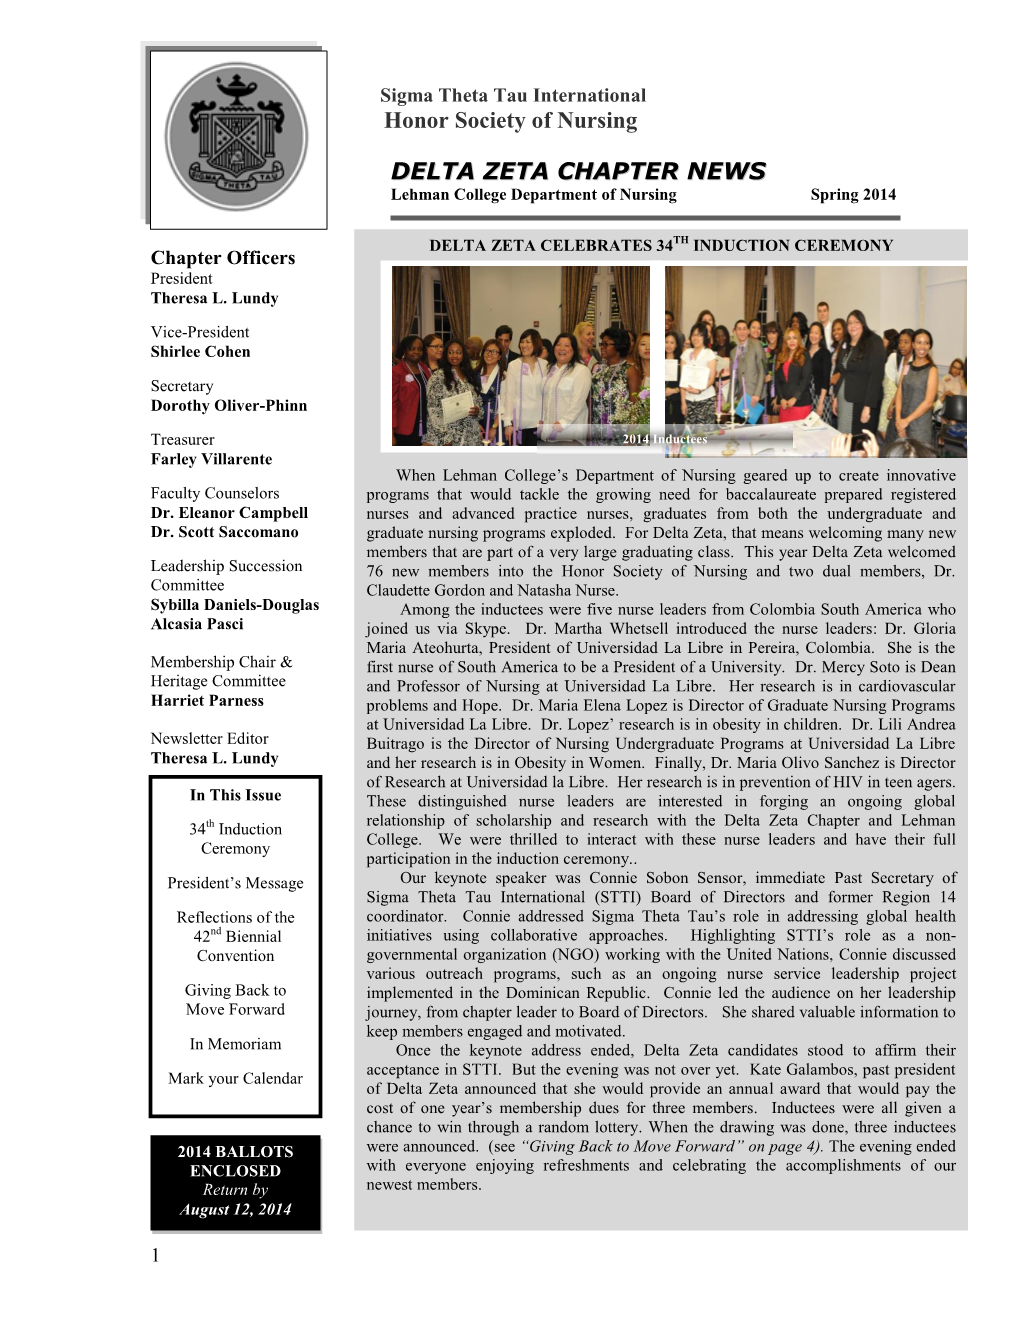 Sigma Theta Tau International Honor Society of Nursing